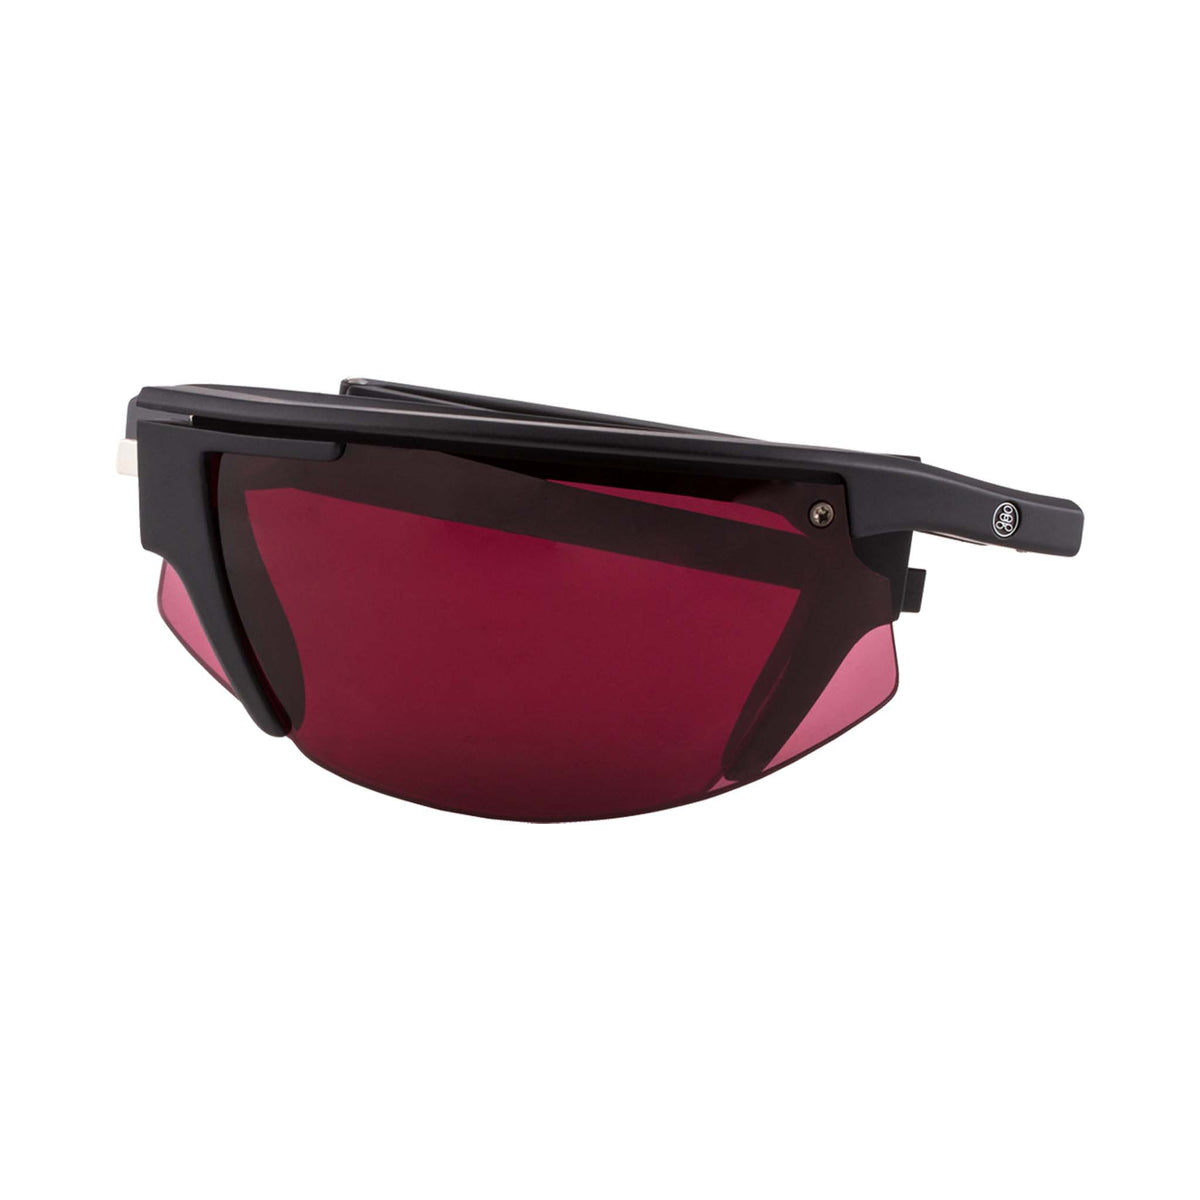 Popticals, Premium Compact Sunglasses, PopStar, 200040-BMPS, Standard Golf Sunglasses, Matte Black Frame, Purple Golf Lenses, Compact View